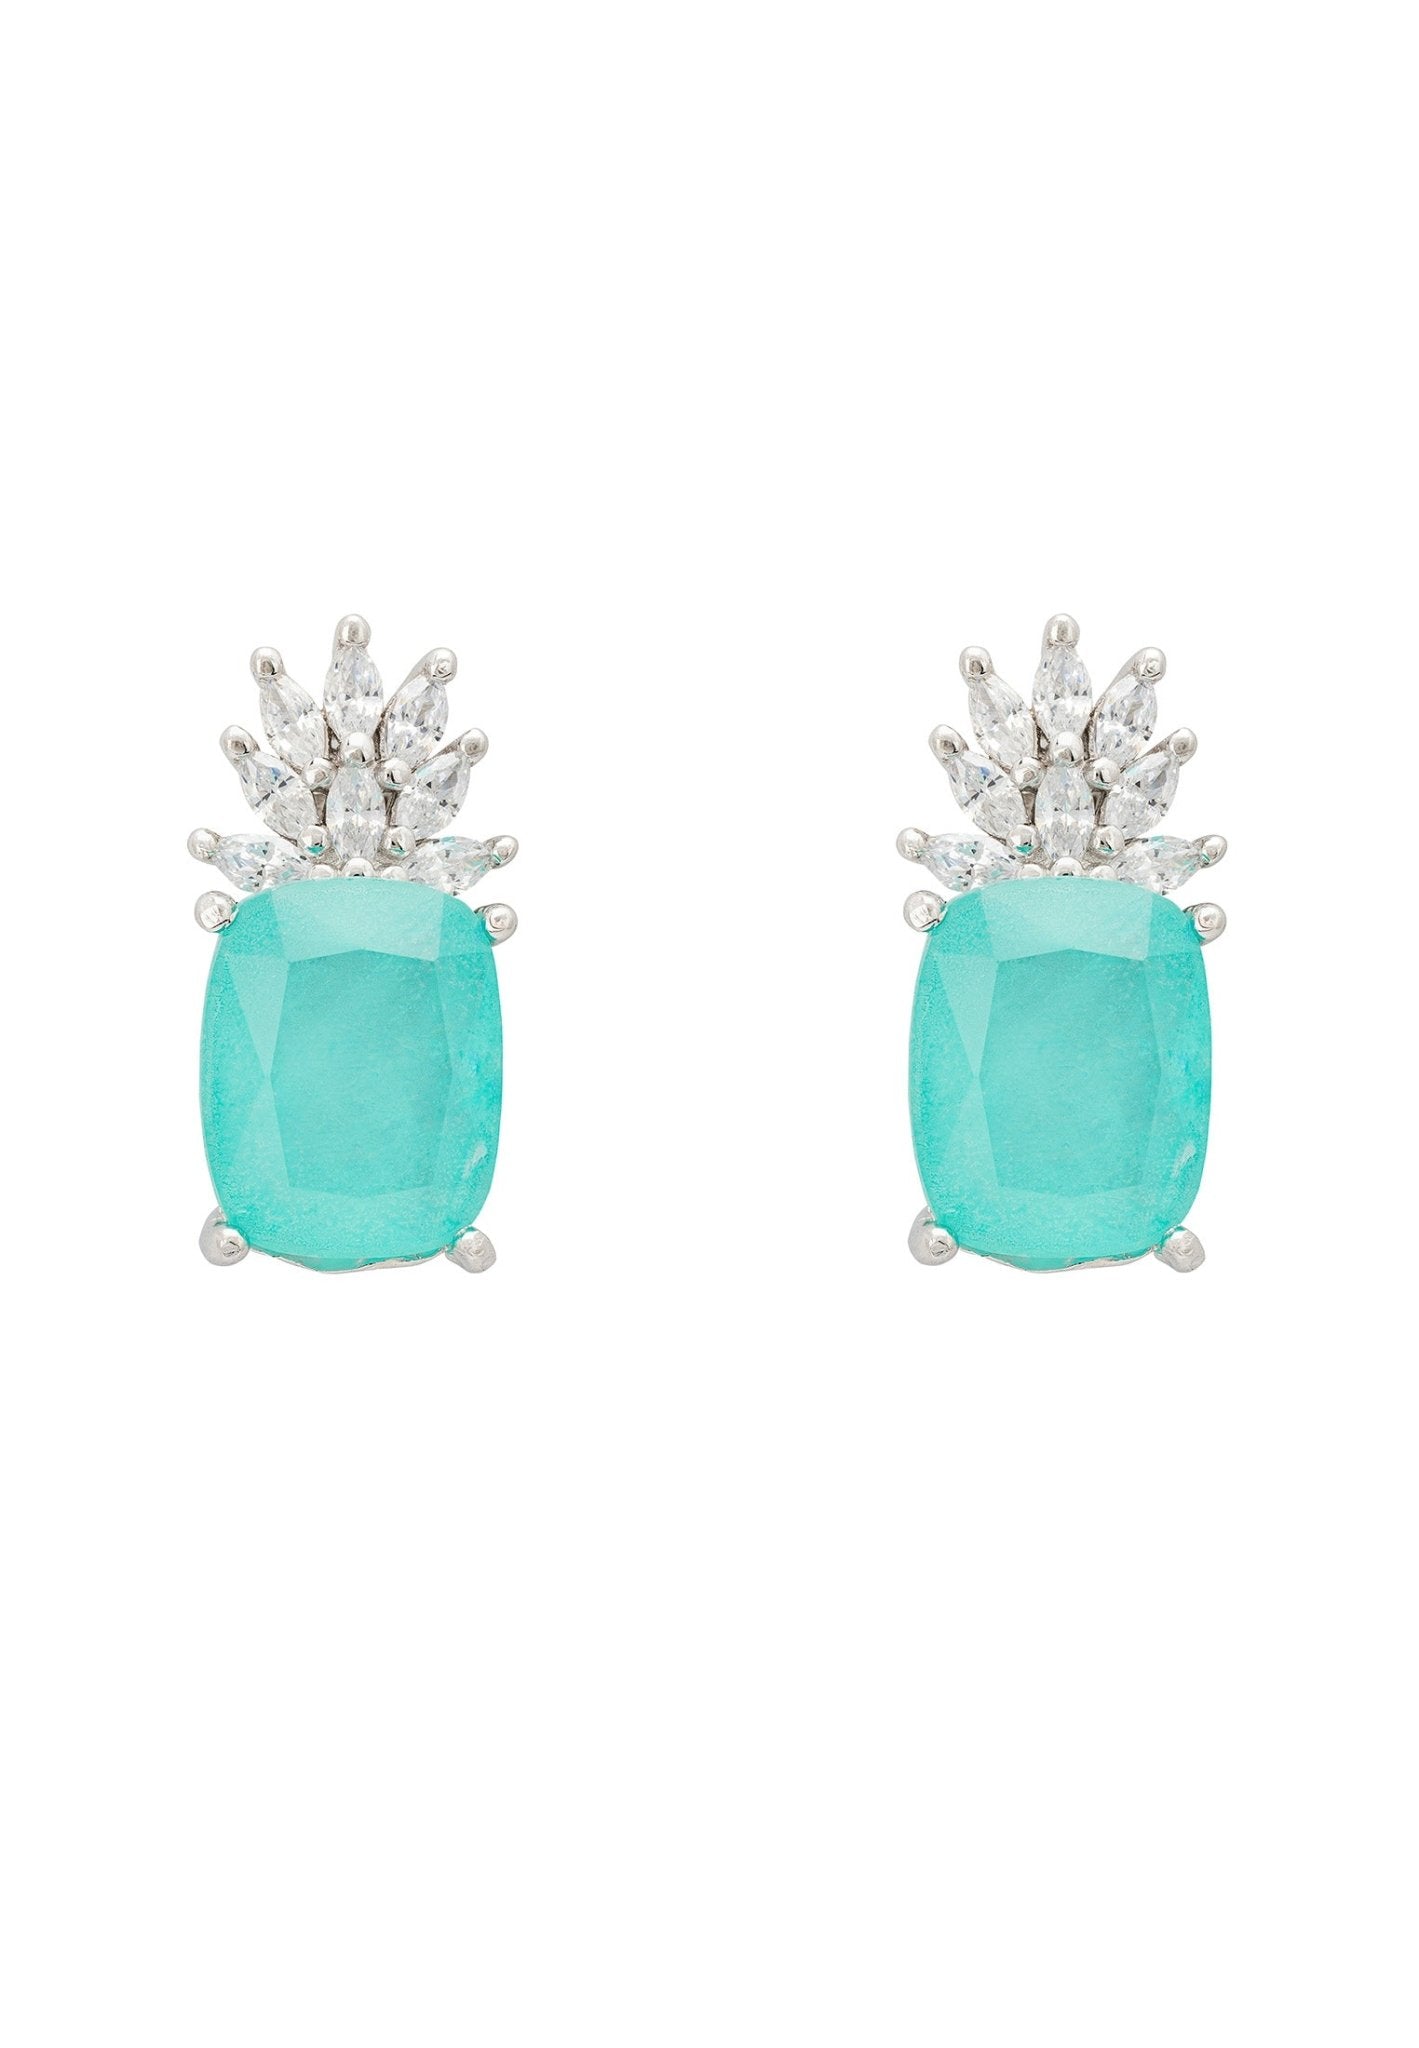 Paraiba Tourmaline Earrings Loose Gemstones 6.25 Carats Pear Shapes at  1stDibs | blue green tourmaline earrings, blue tourmaline earrings, loose paraiba  tourmaline